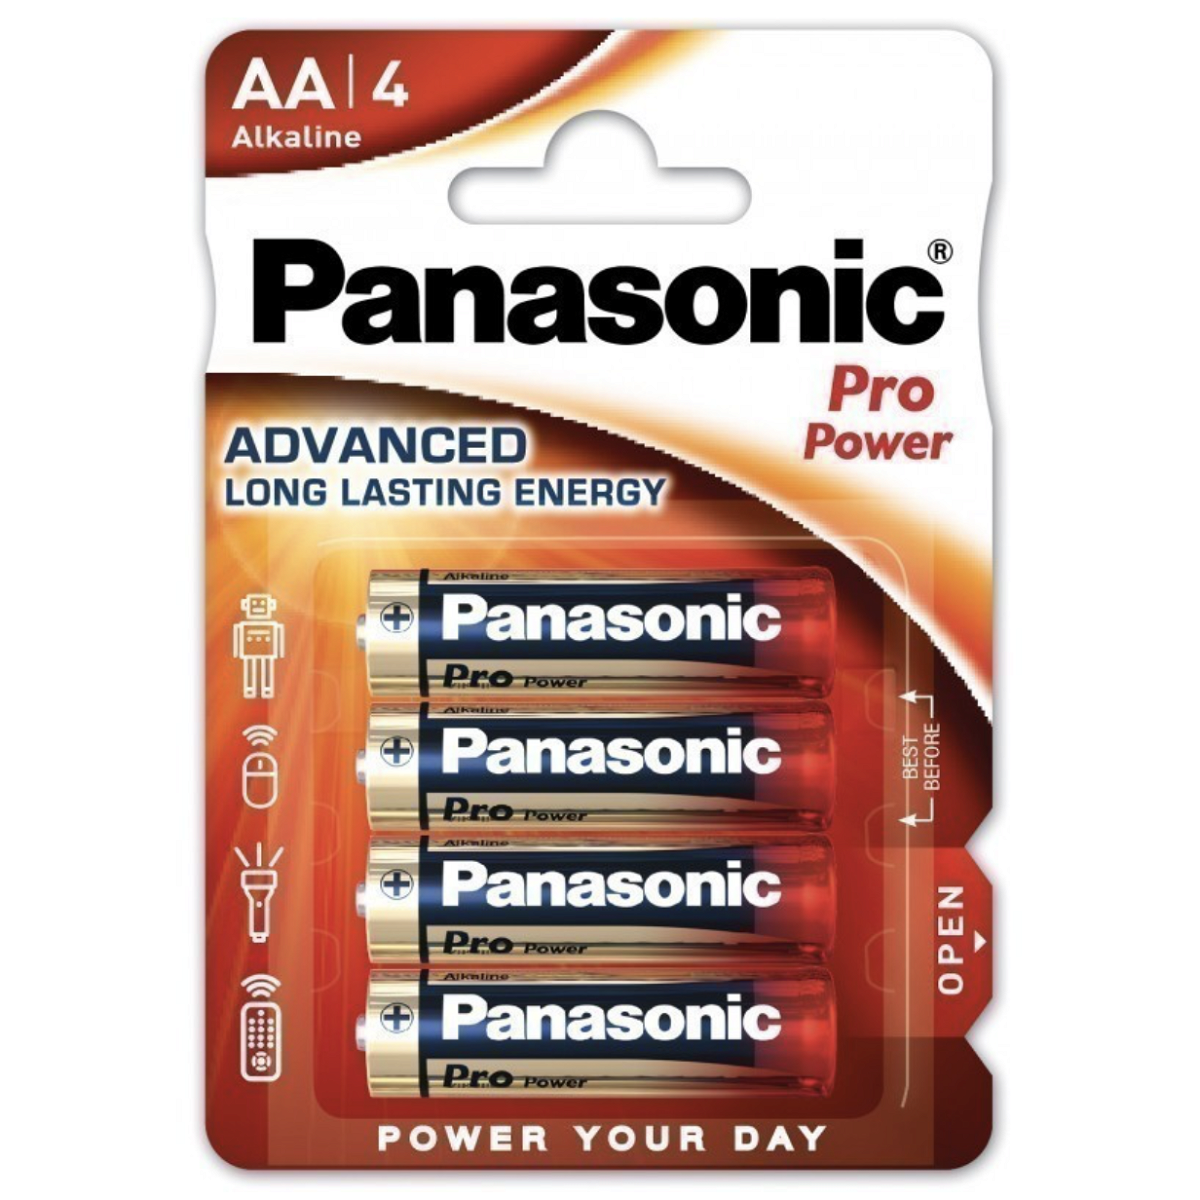 Panasonic Pro Power AA/LR6 Battery